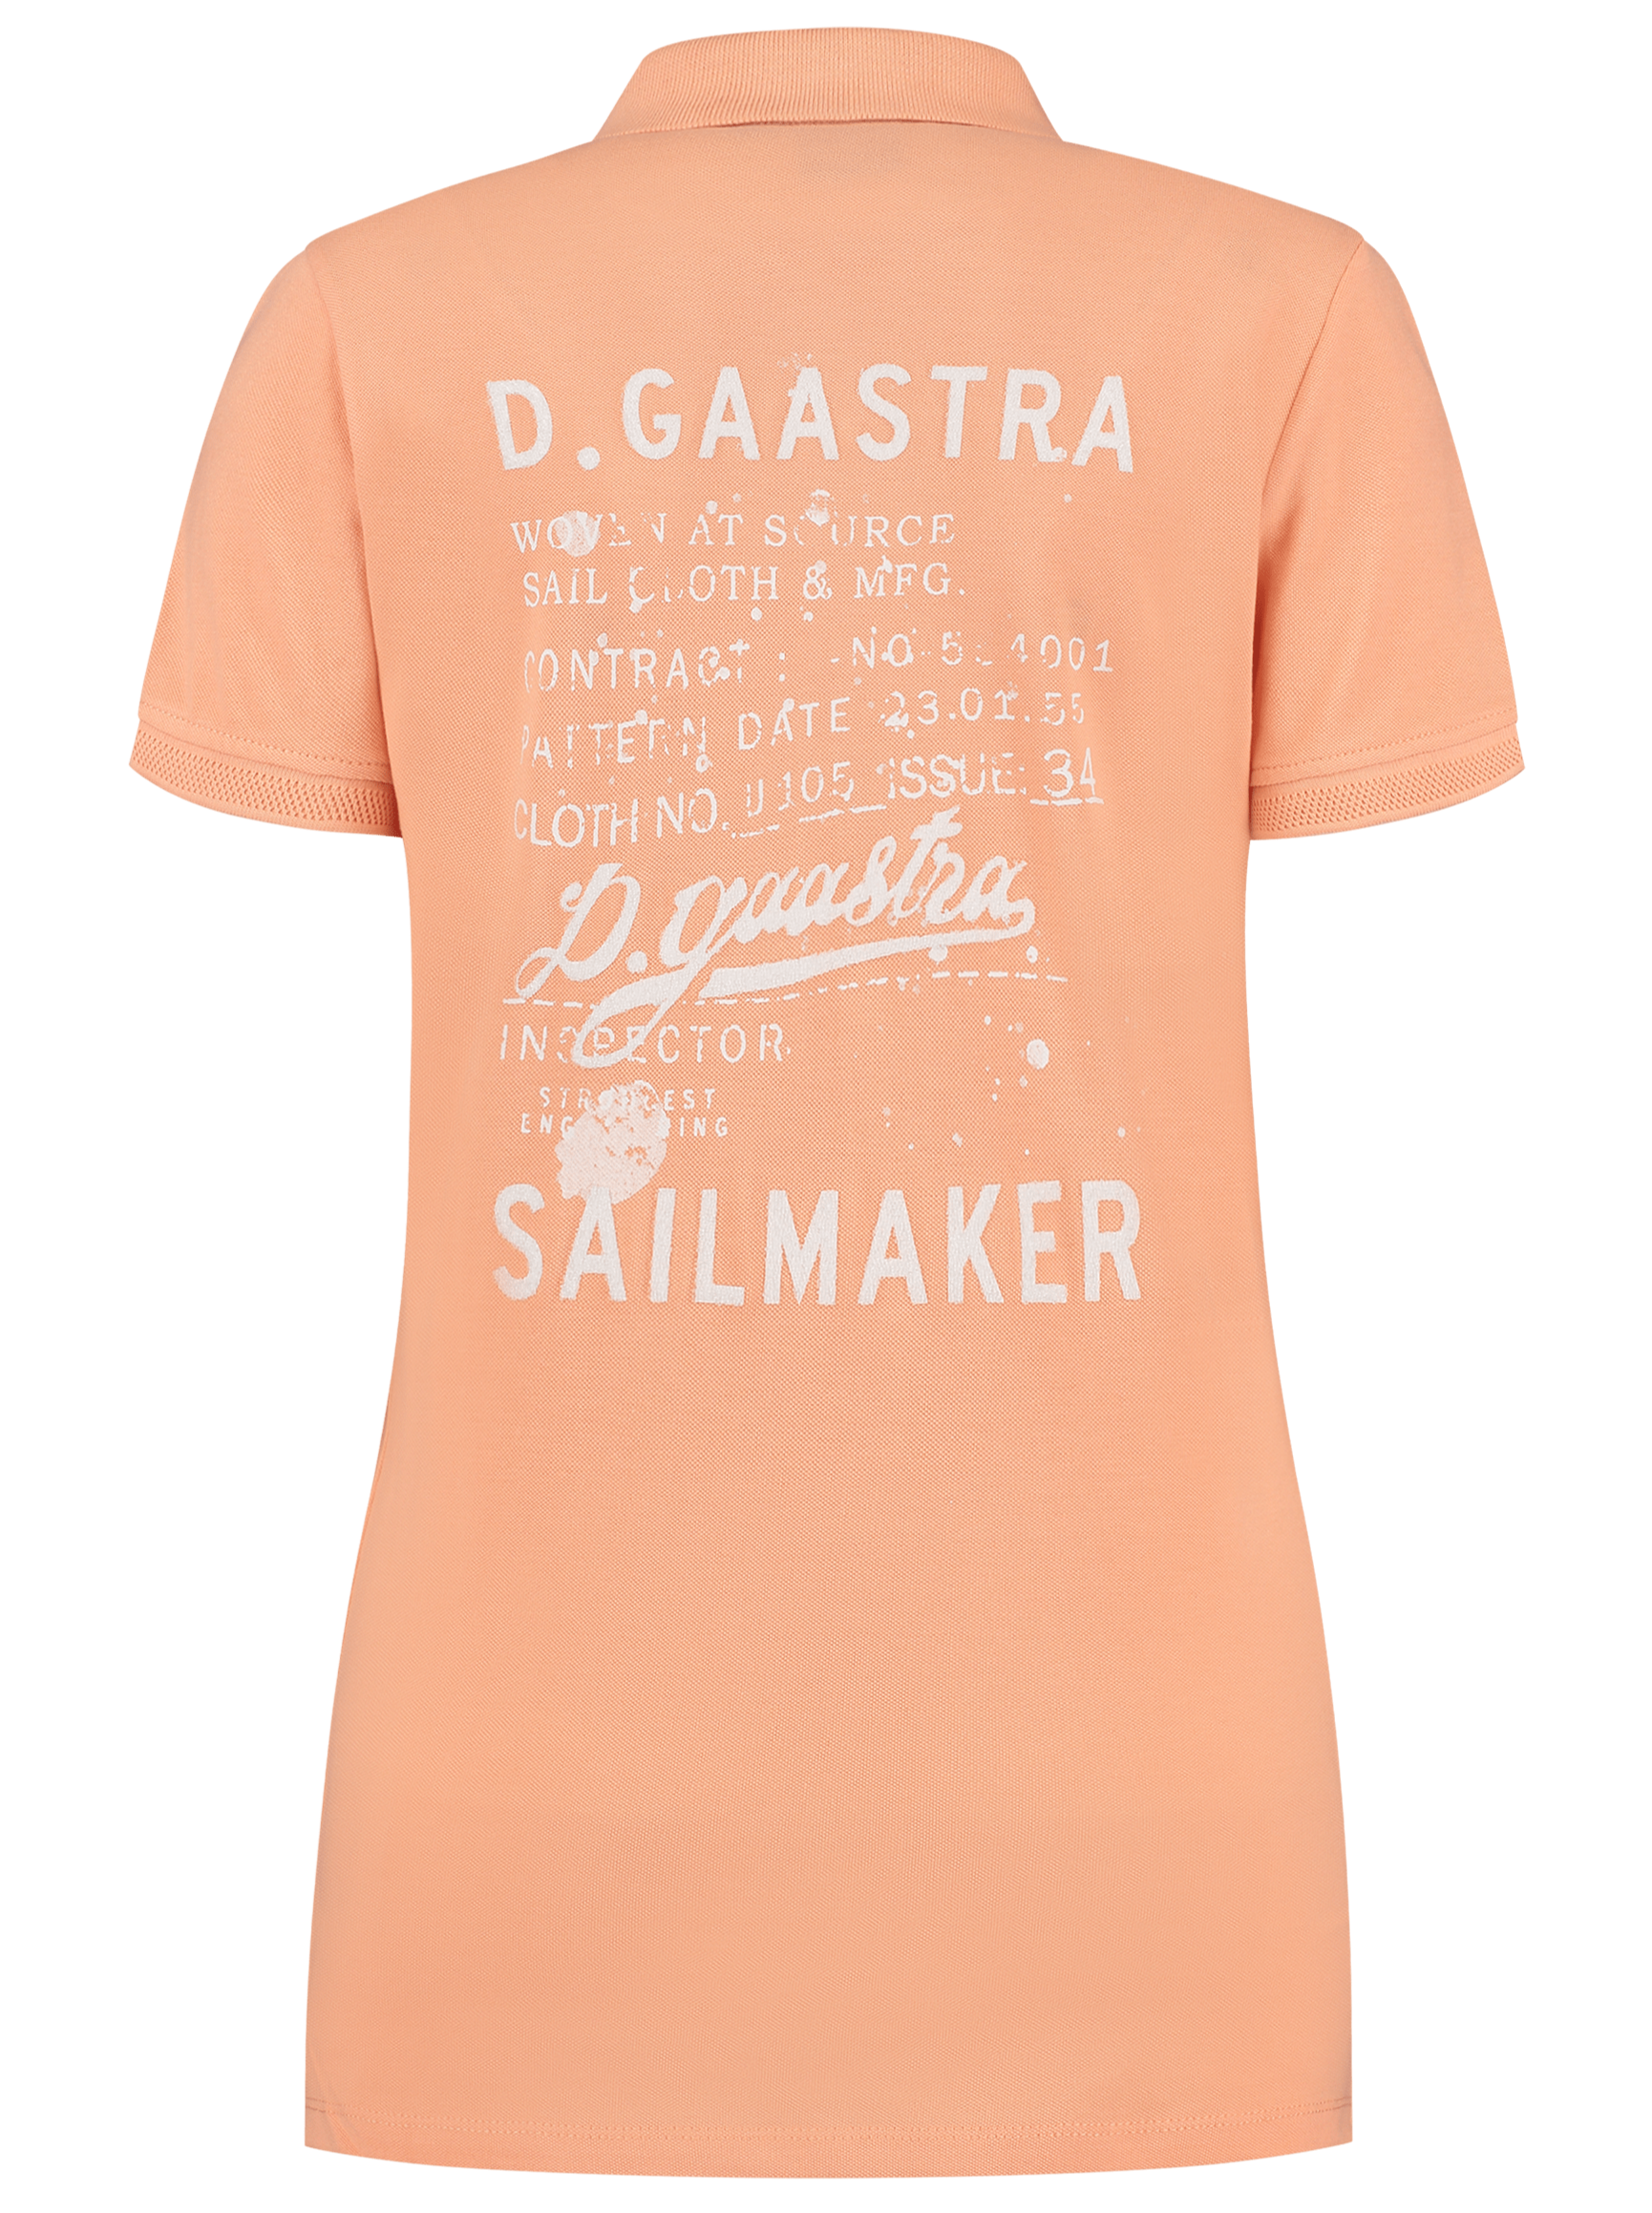 GaastraPolo shirt "Port Vauban" - 100% cotton - orange